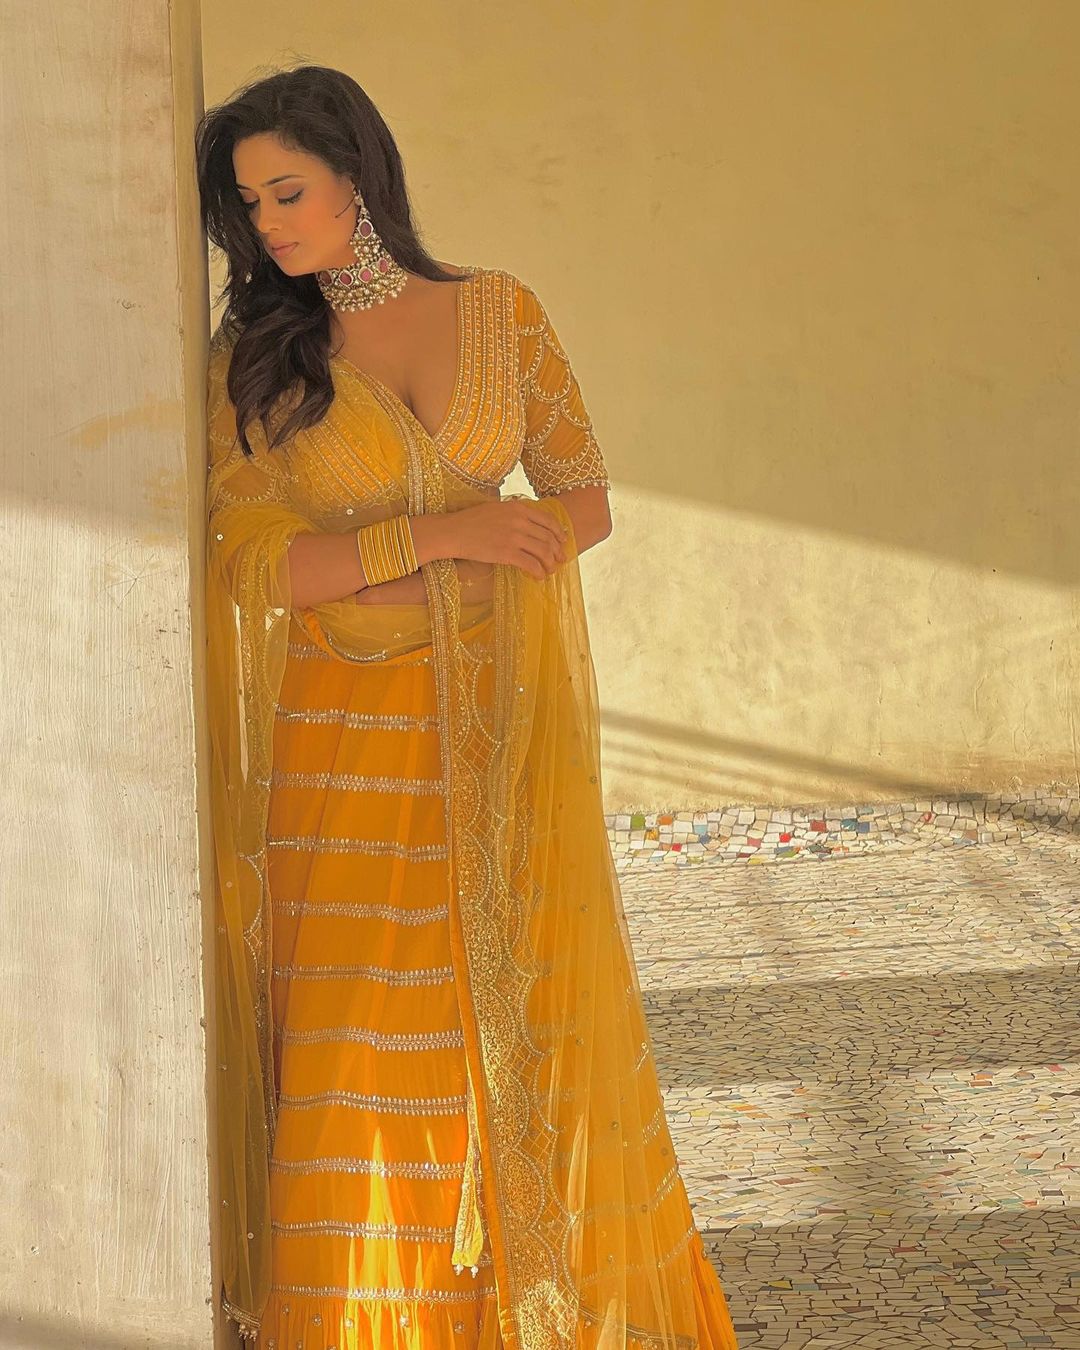 Shweta Tiwari looks pretty in the yellow lehenga with mirrorwork embellishment.